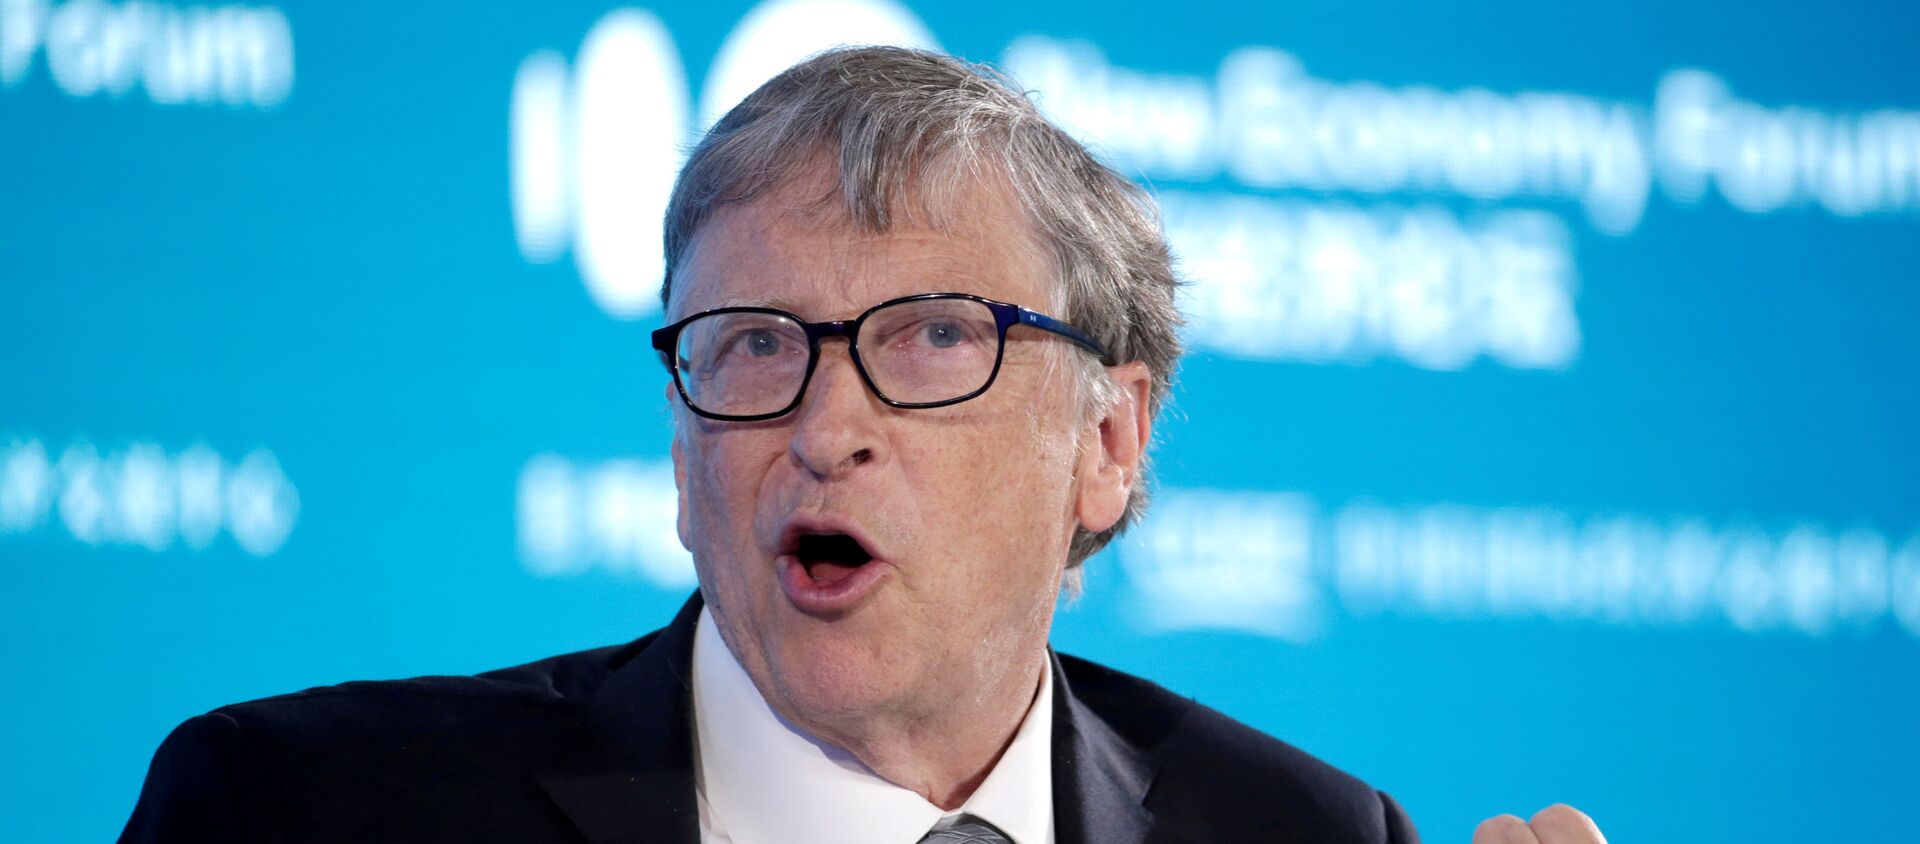 Bill Gates, Co-Chair of Bill & Melinda Gates Foundation, attends a conversation at the 2019 New Economy Forum in Beijing, China November 21, 2019 - Sputnik International, 1920, 11.02.2021